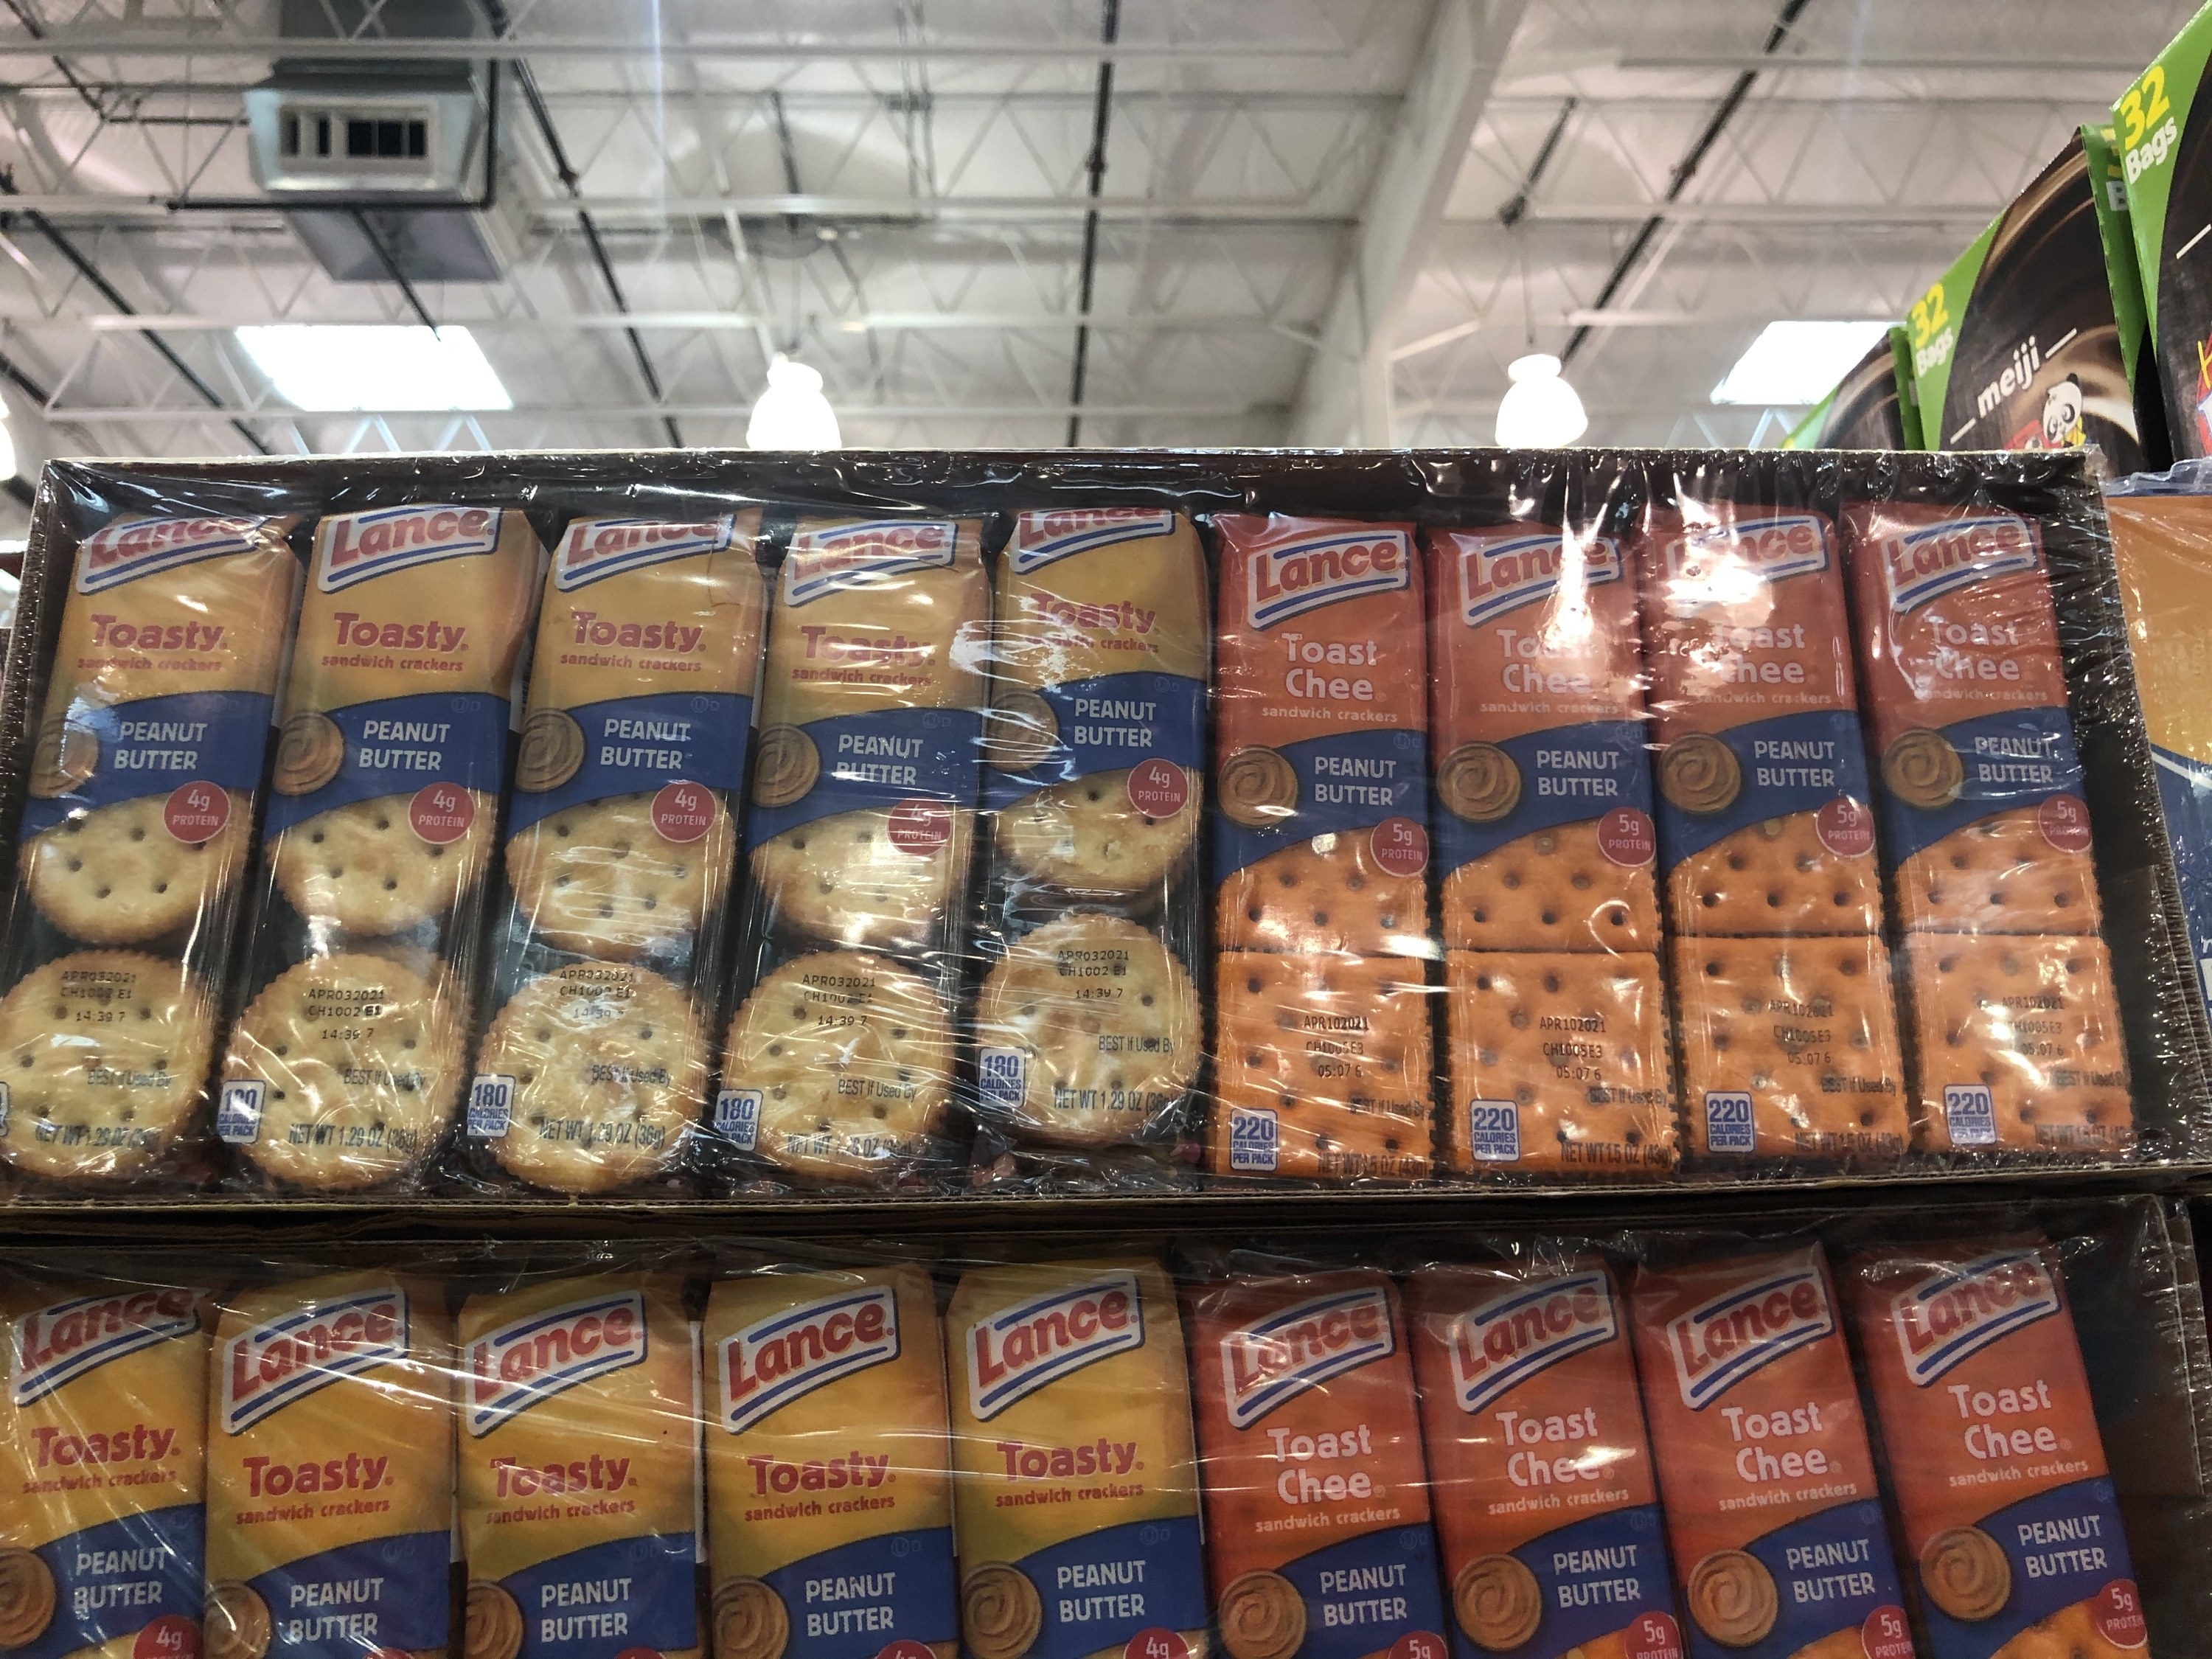 A box of Lance cracker snacks